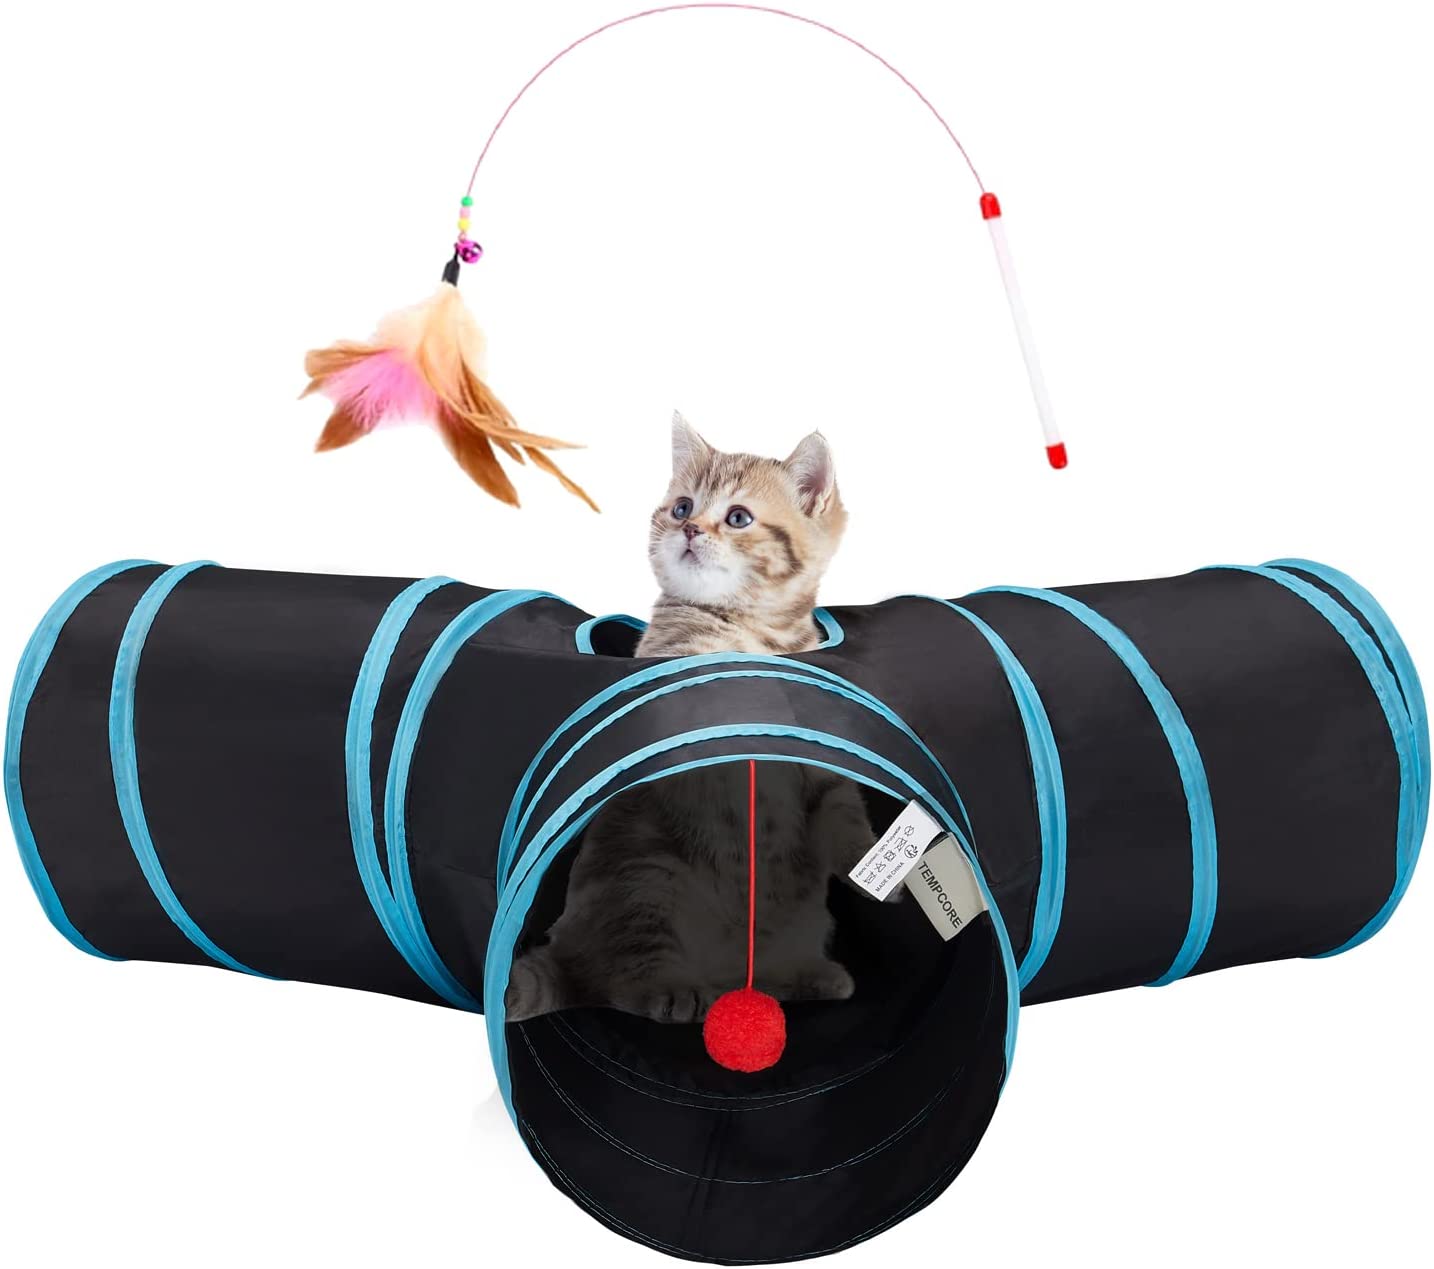 Tempcore Pet Cat Tunnel